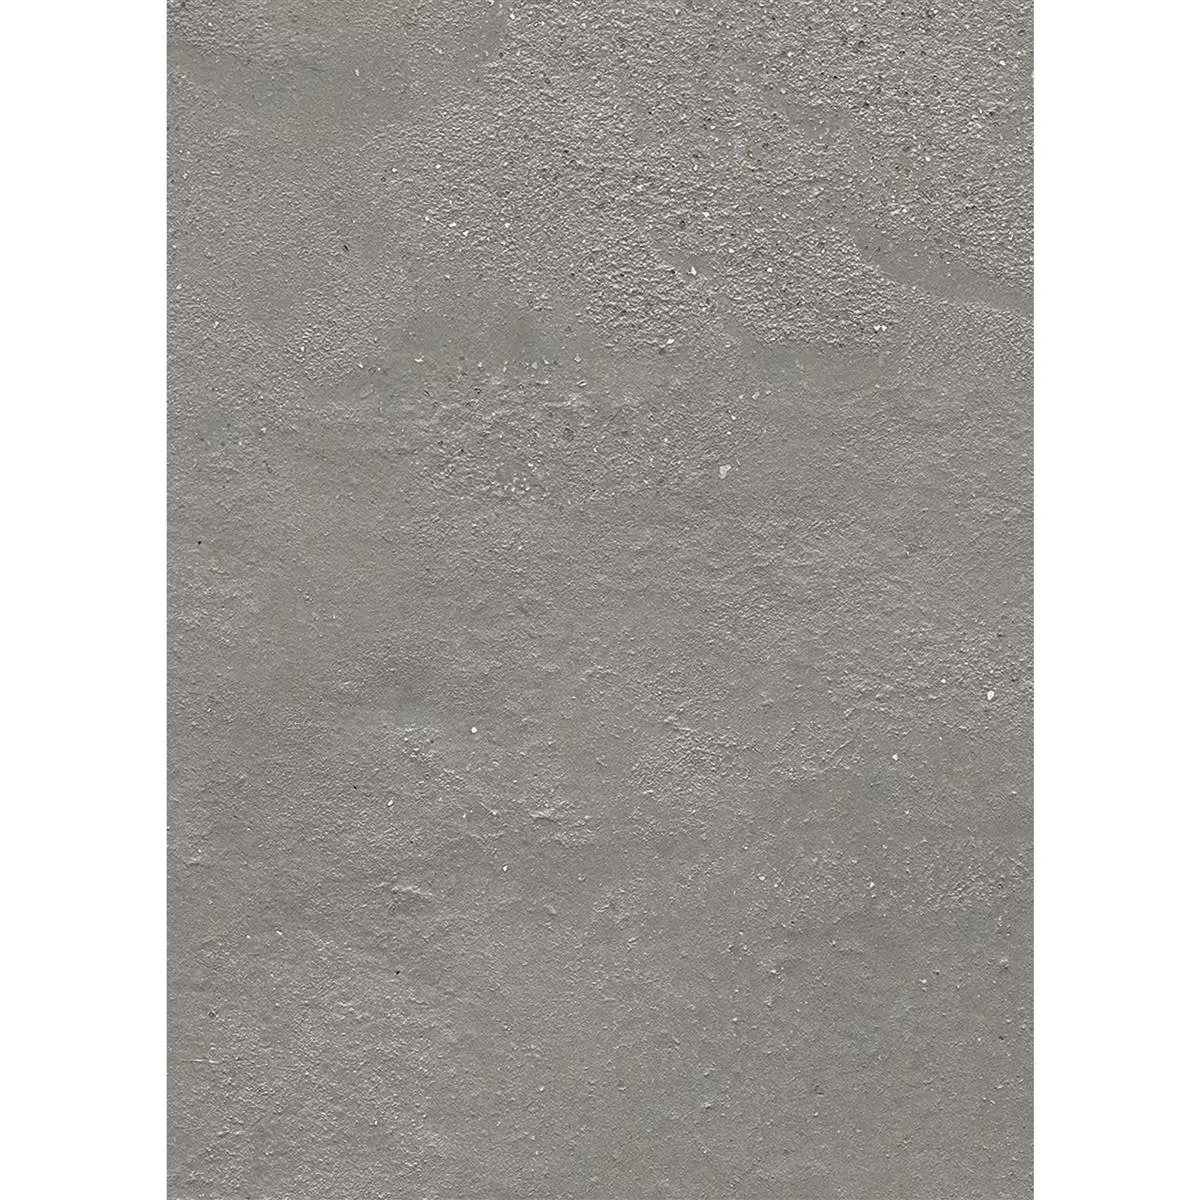 Ladrilho Malibu Olhar Concreto Cinza Claro 60x120cm